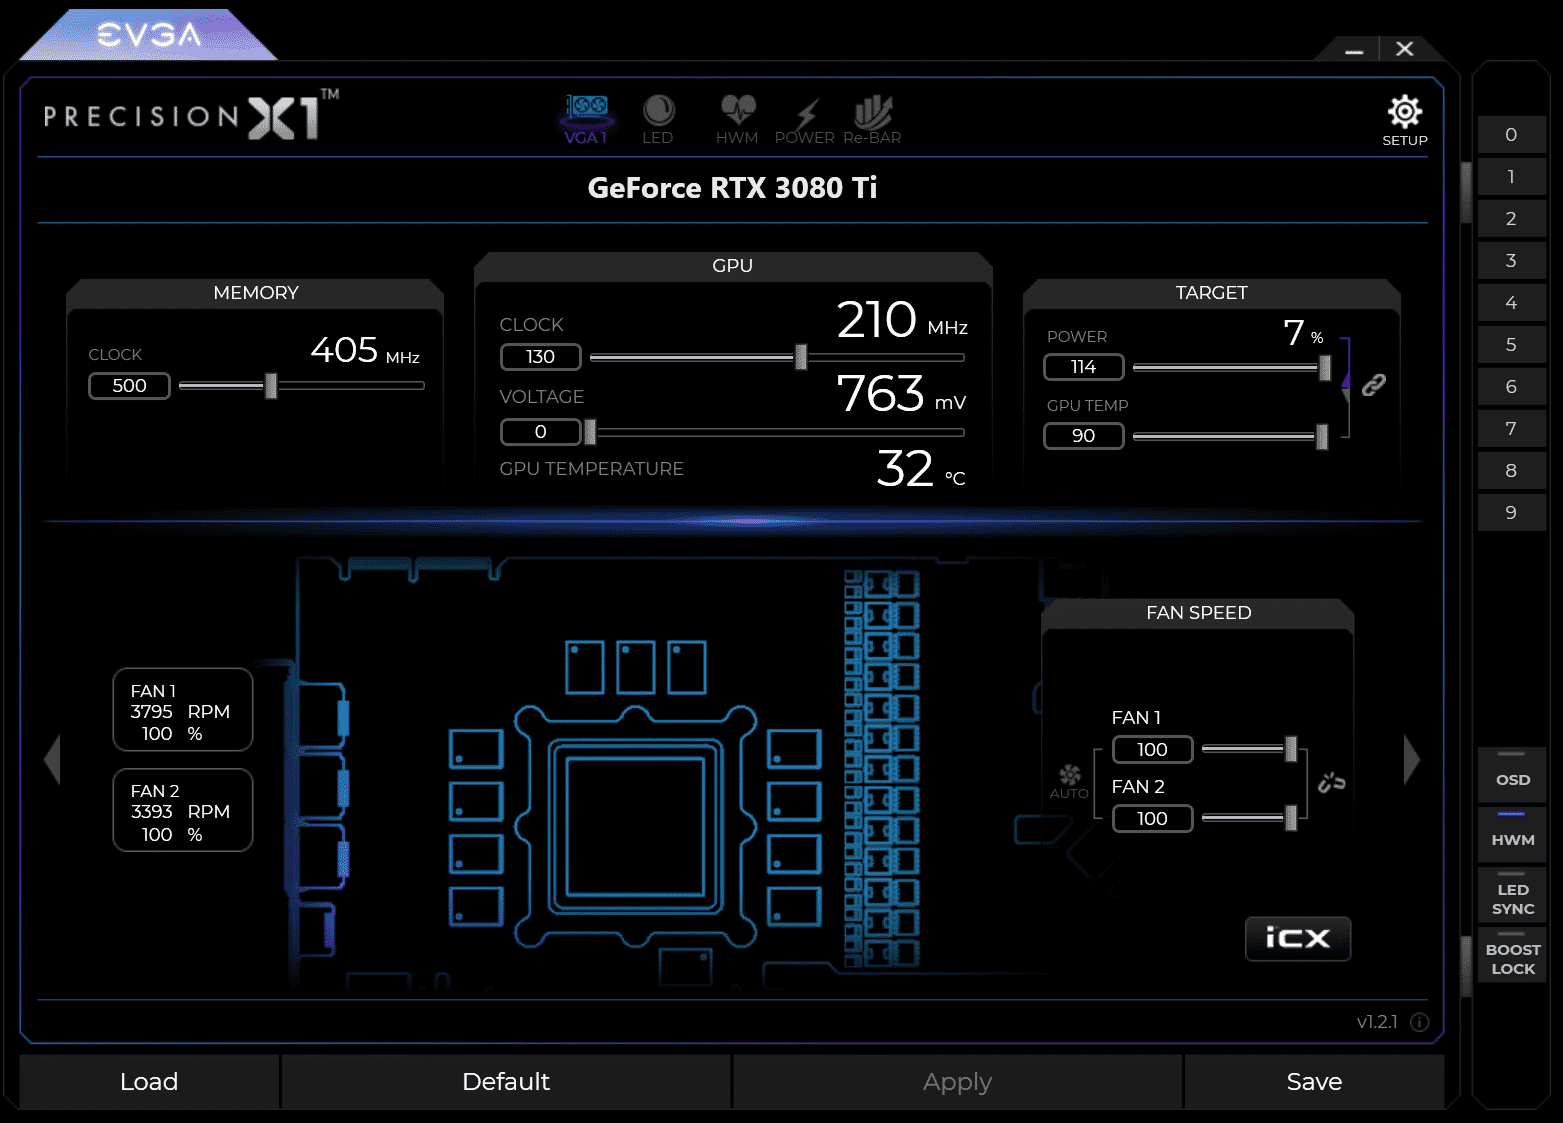 NVIDIA GeForce RTX 3080Tiファウンダーズエディション - JA Atsit